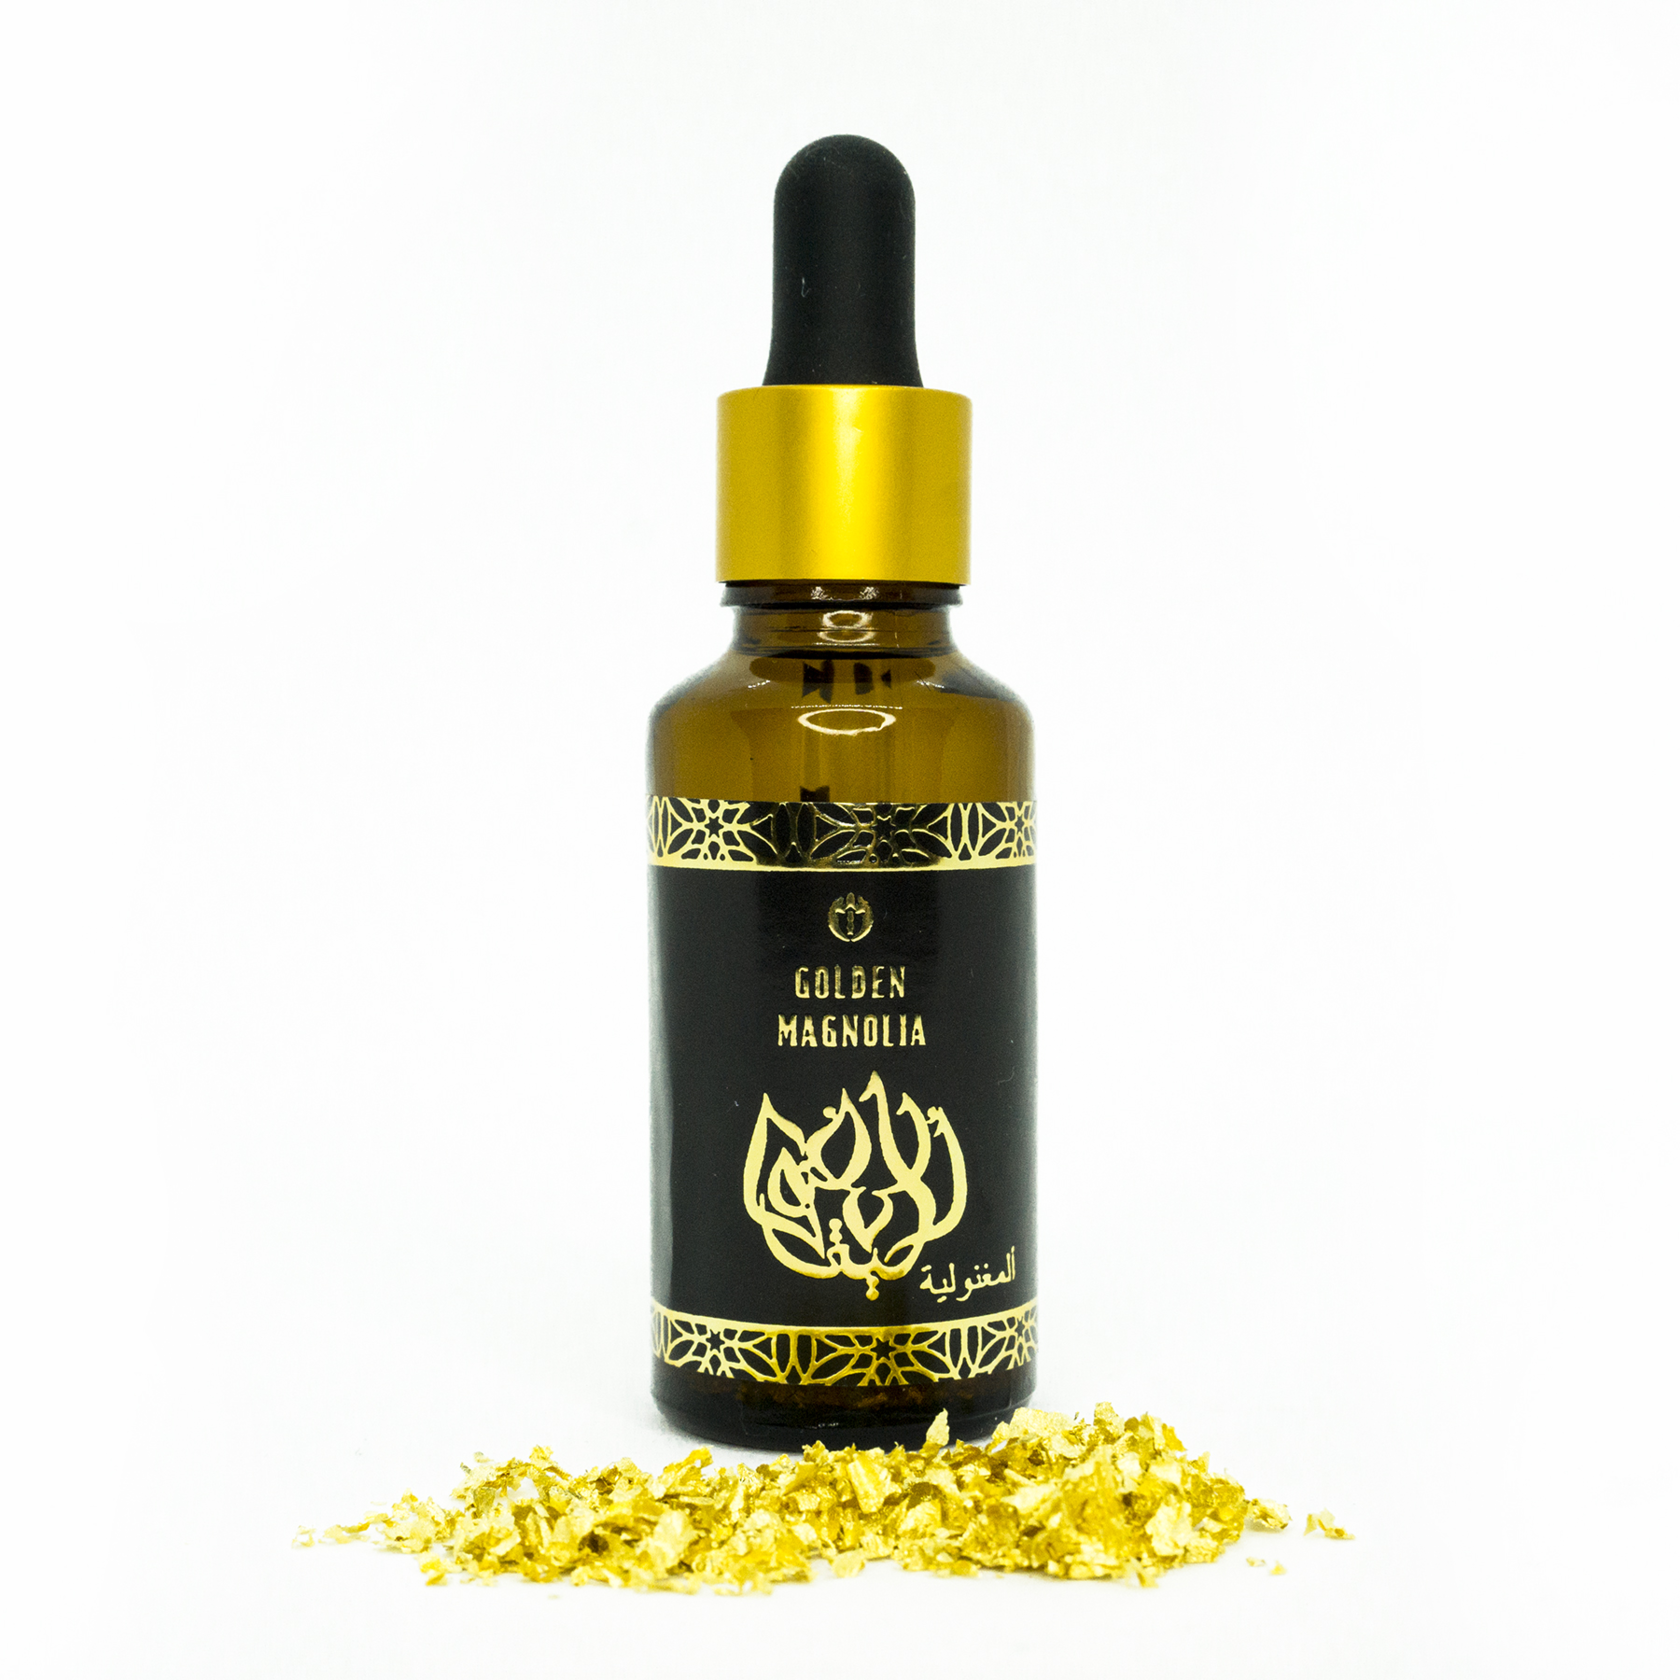 Golden MAGNOLIA 
арома-масло с косметическим золотом